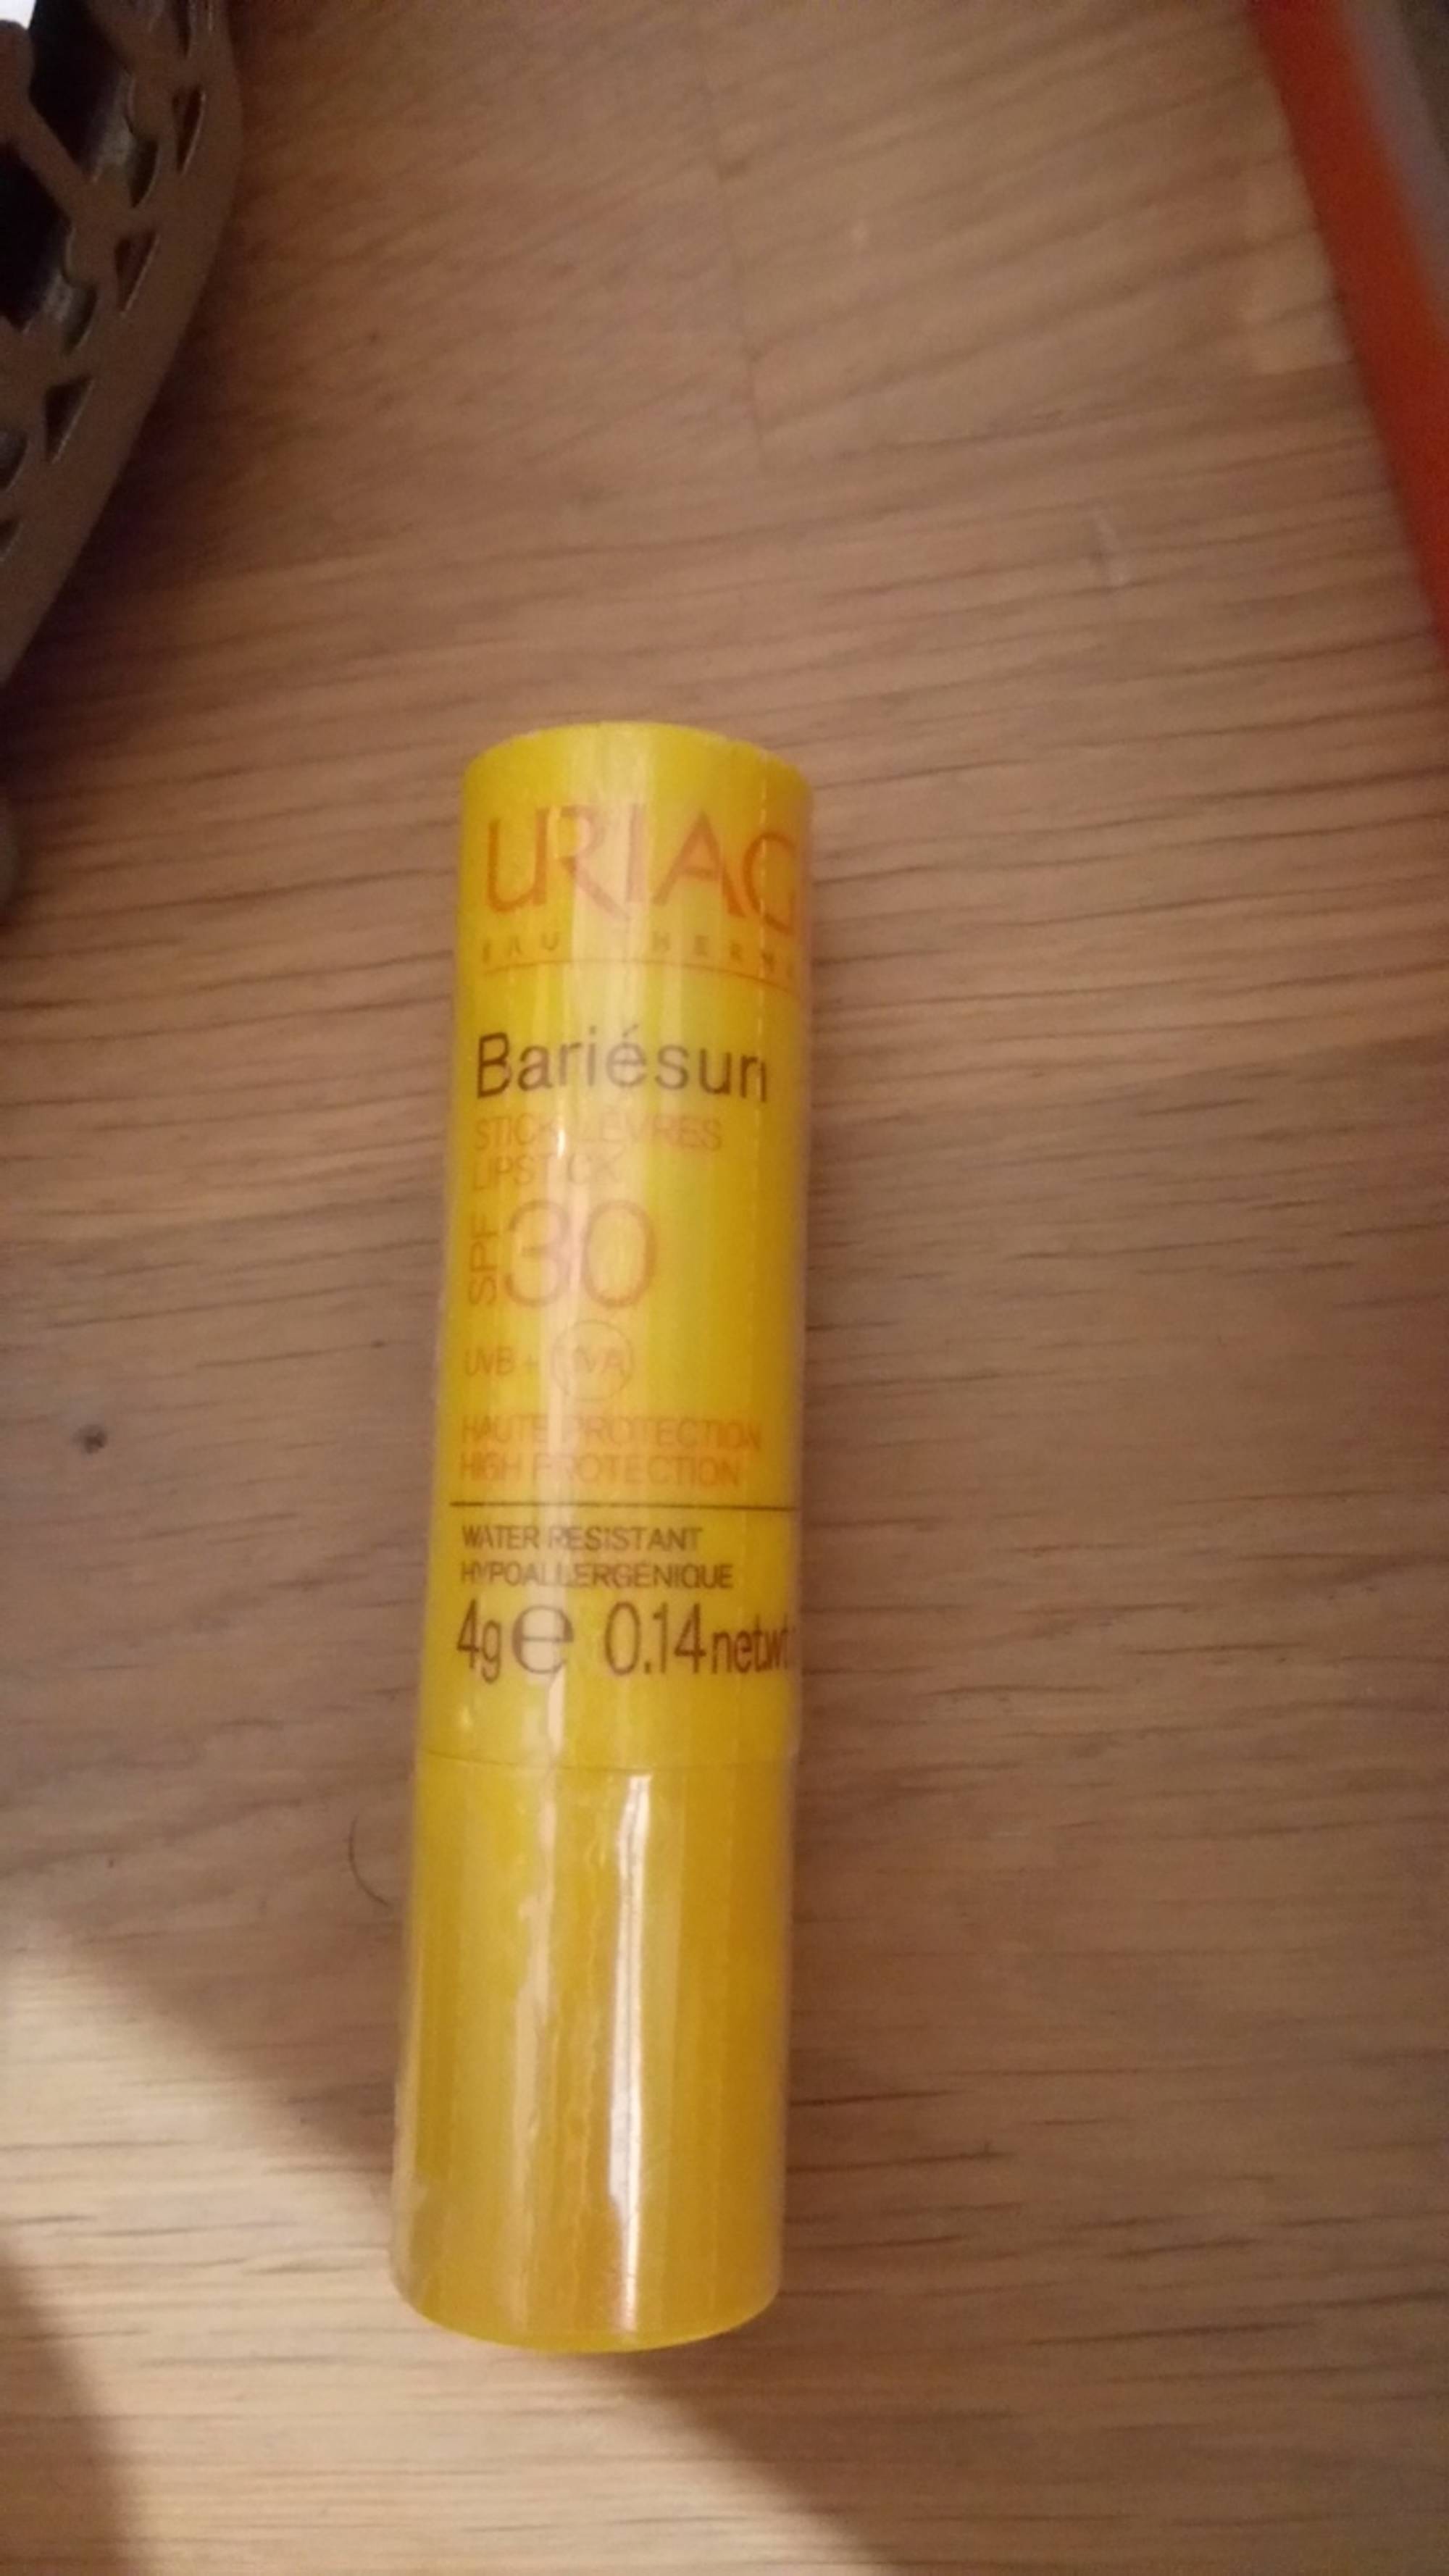 URIAGE - Bariésun - Stick lèvres spf 30